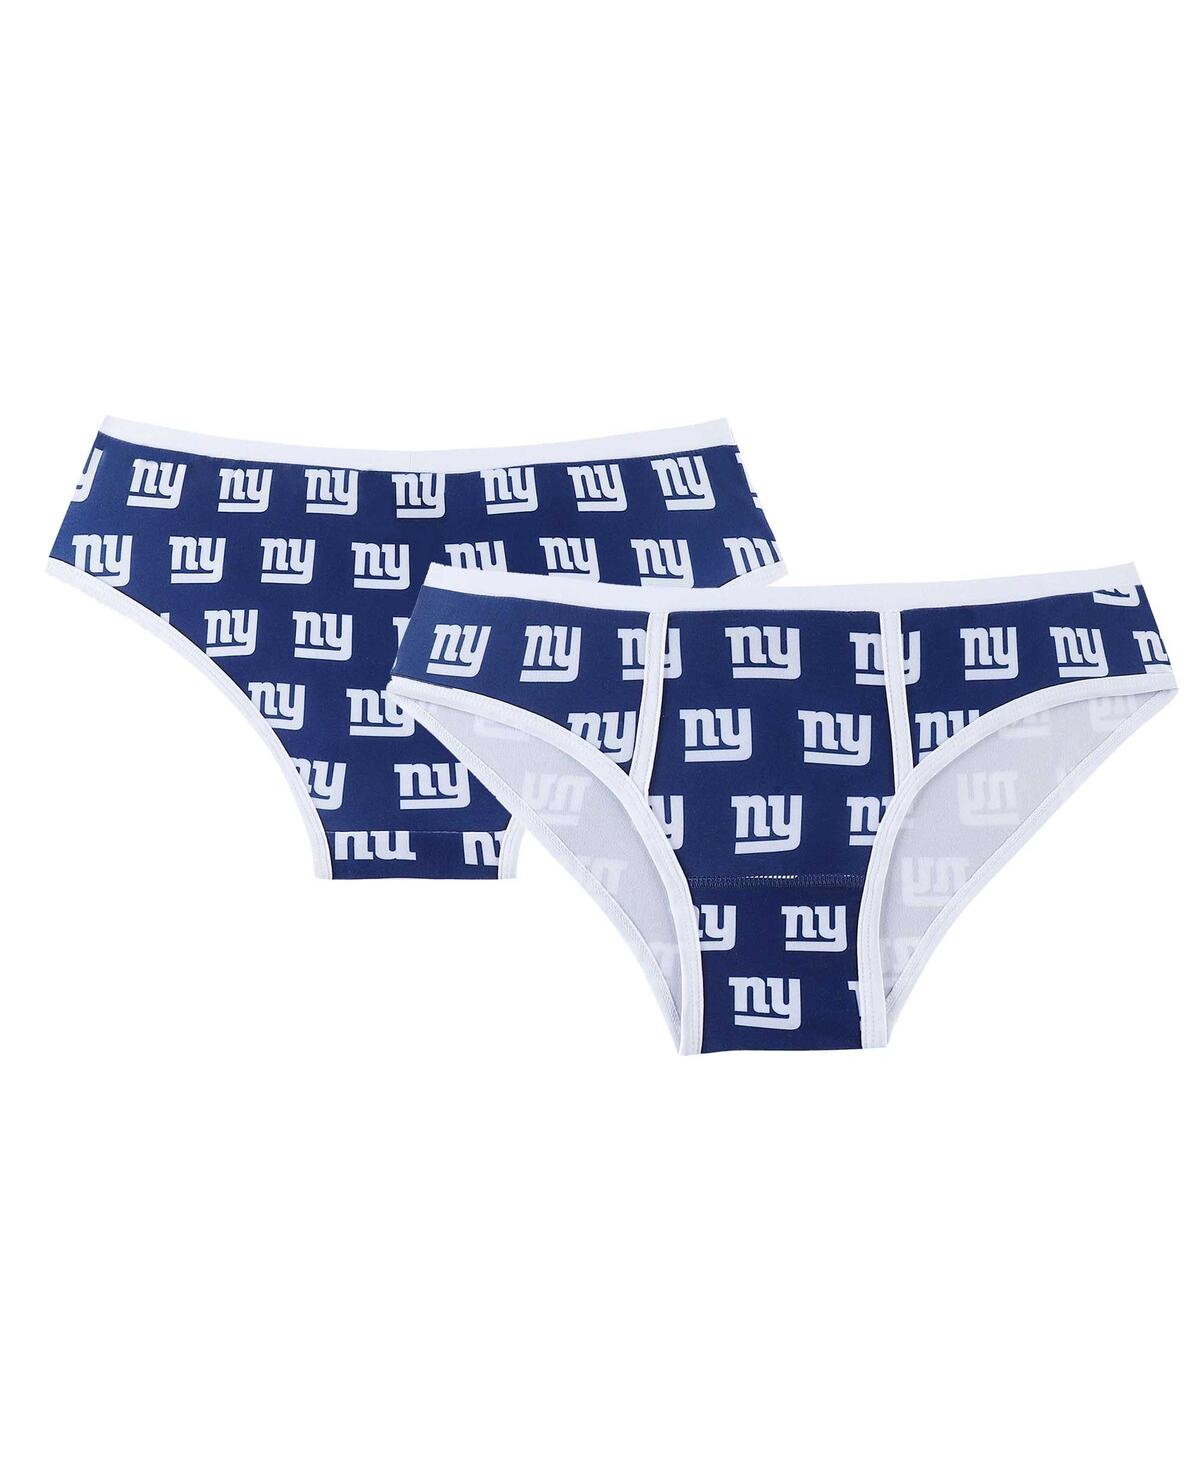 Women's Concepts Sport Royal New York Giants Gauge Allover Print Knit Panties - Royal